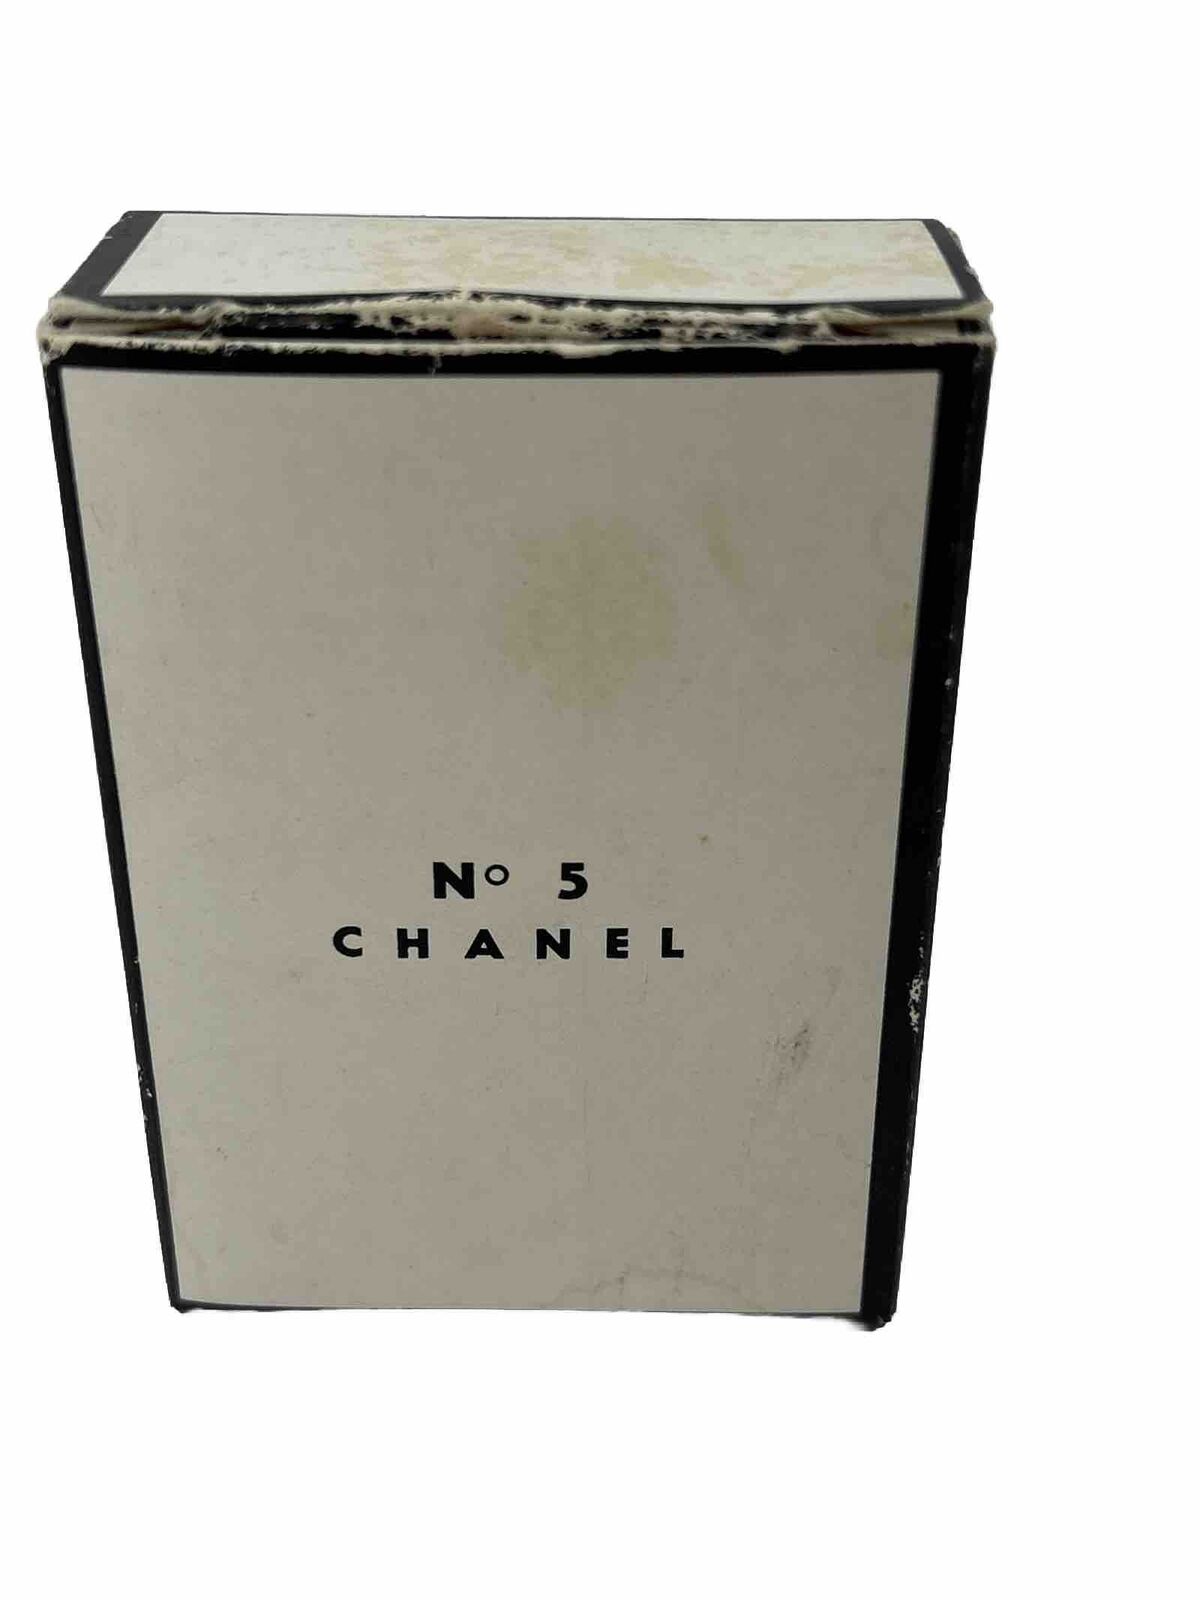 Chanel No 5 Vintage Empty Box  Eau De Perfume Box 3.25